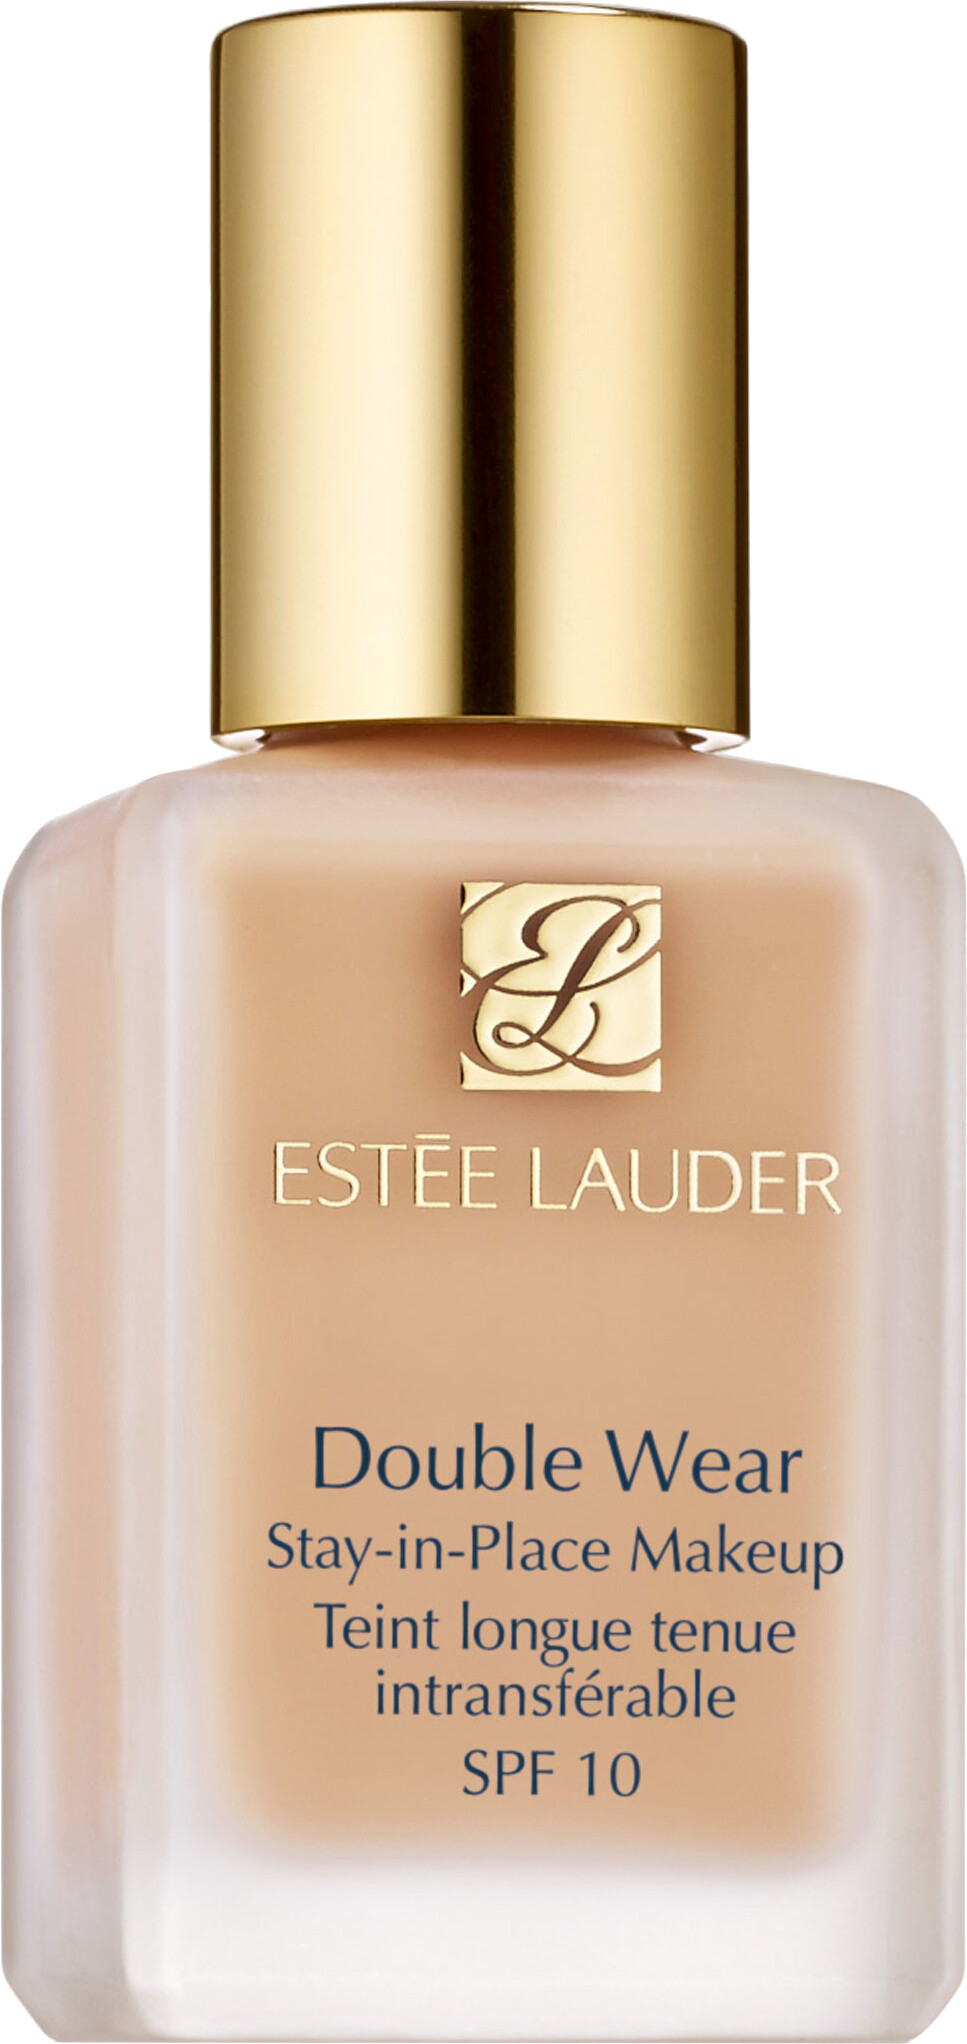 Estee Lauder Double Wear Stay-in-Place Foundation SPF10 30ml 1N0 - Porcelain